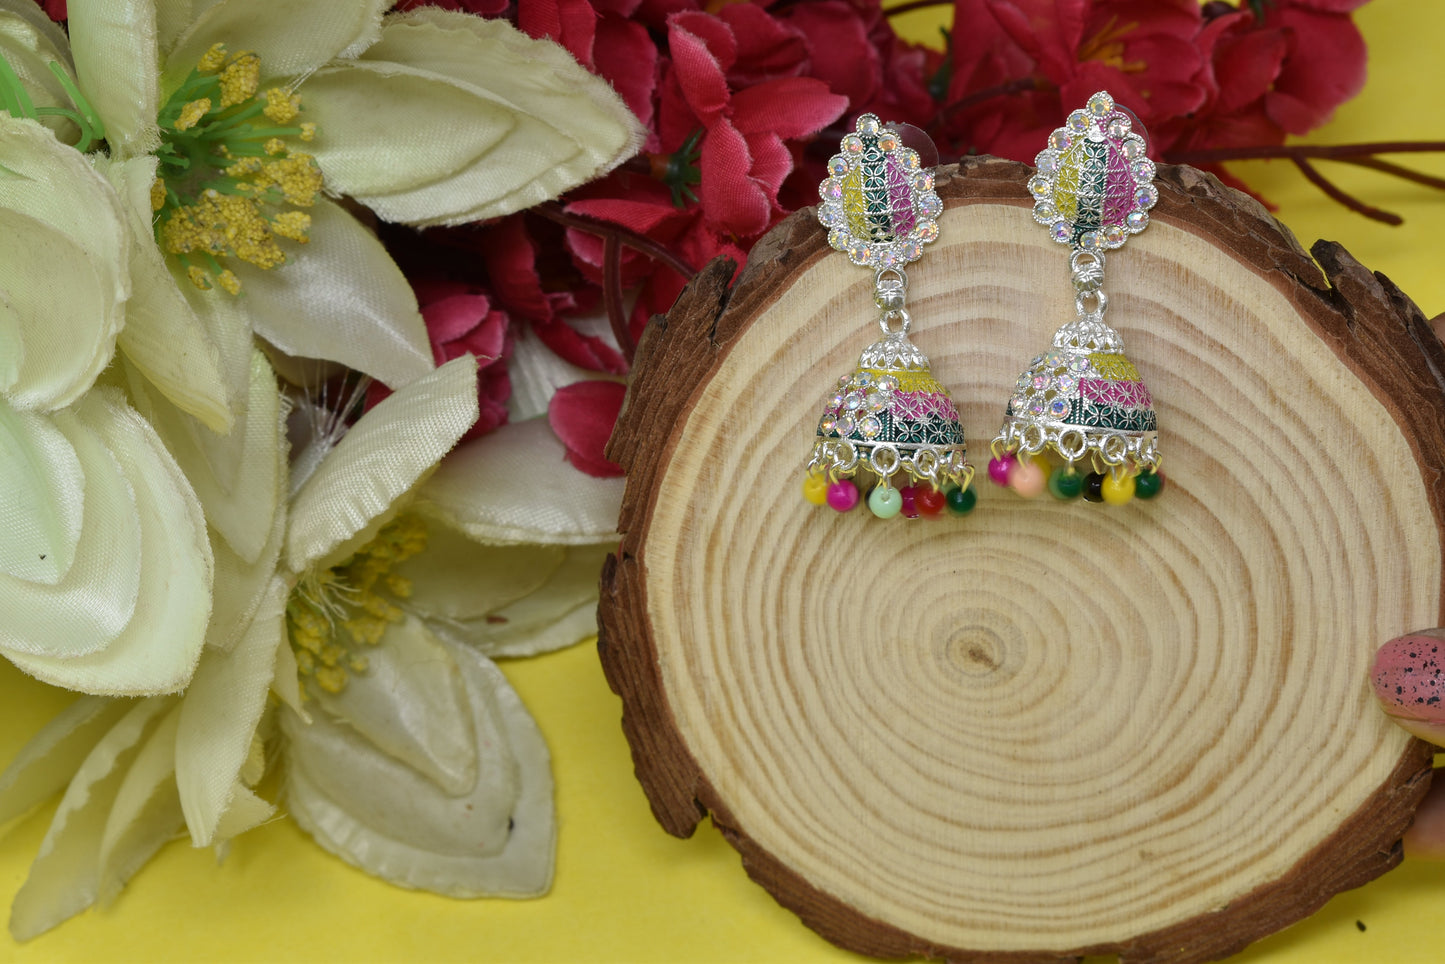 Antique design Minakari work Gold plated Tradional Earrings for women n girls